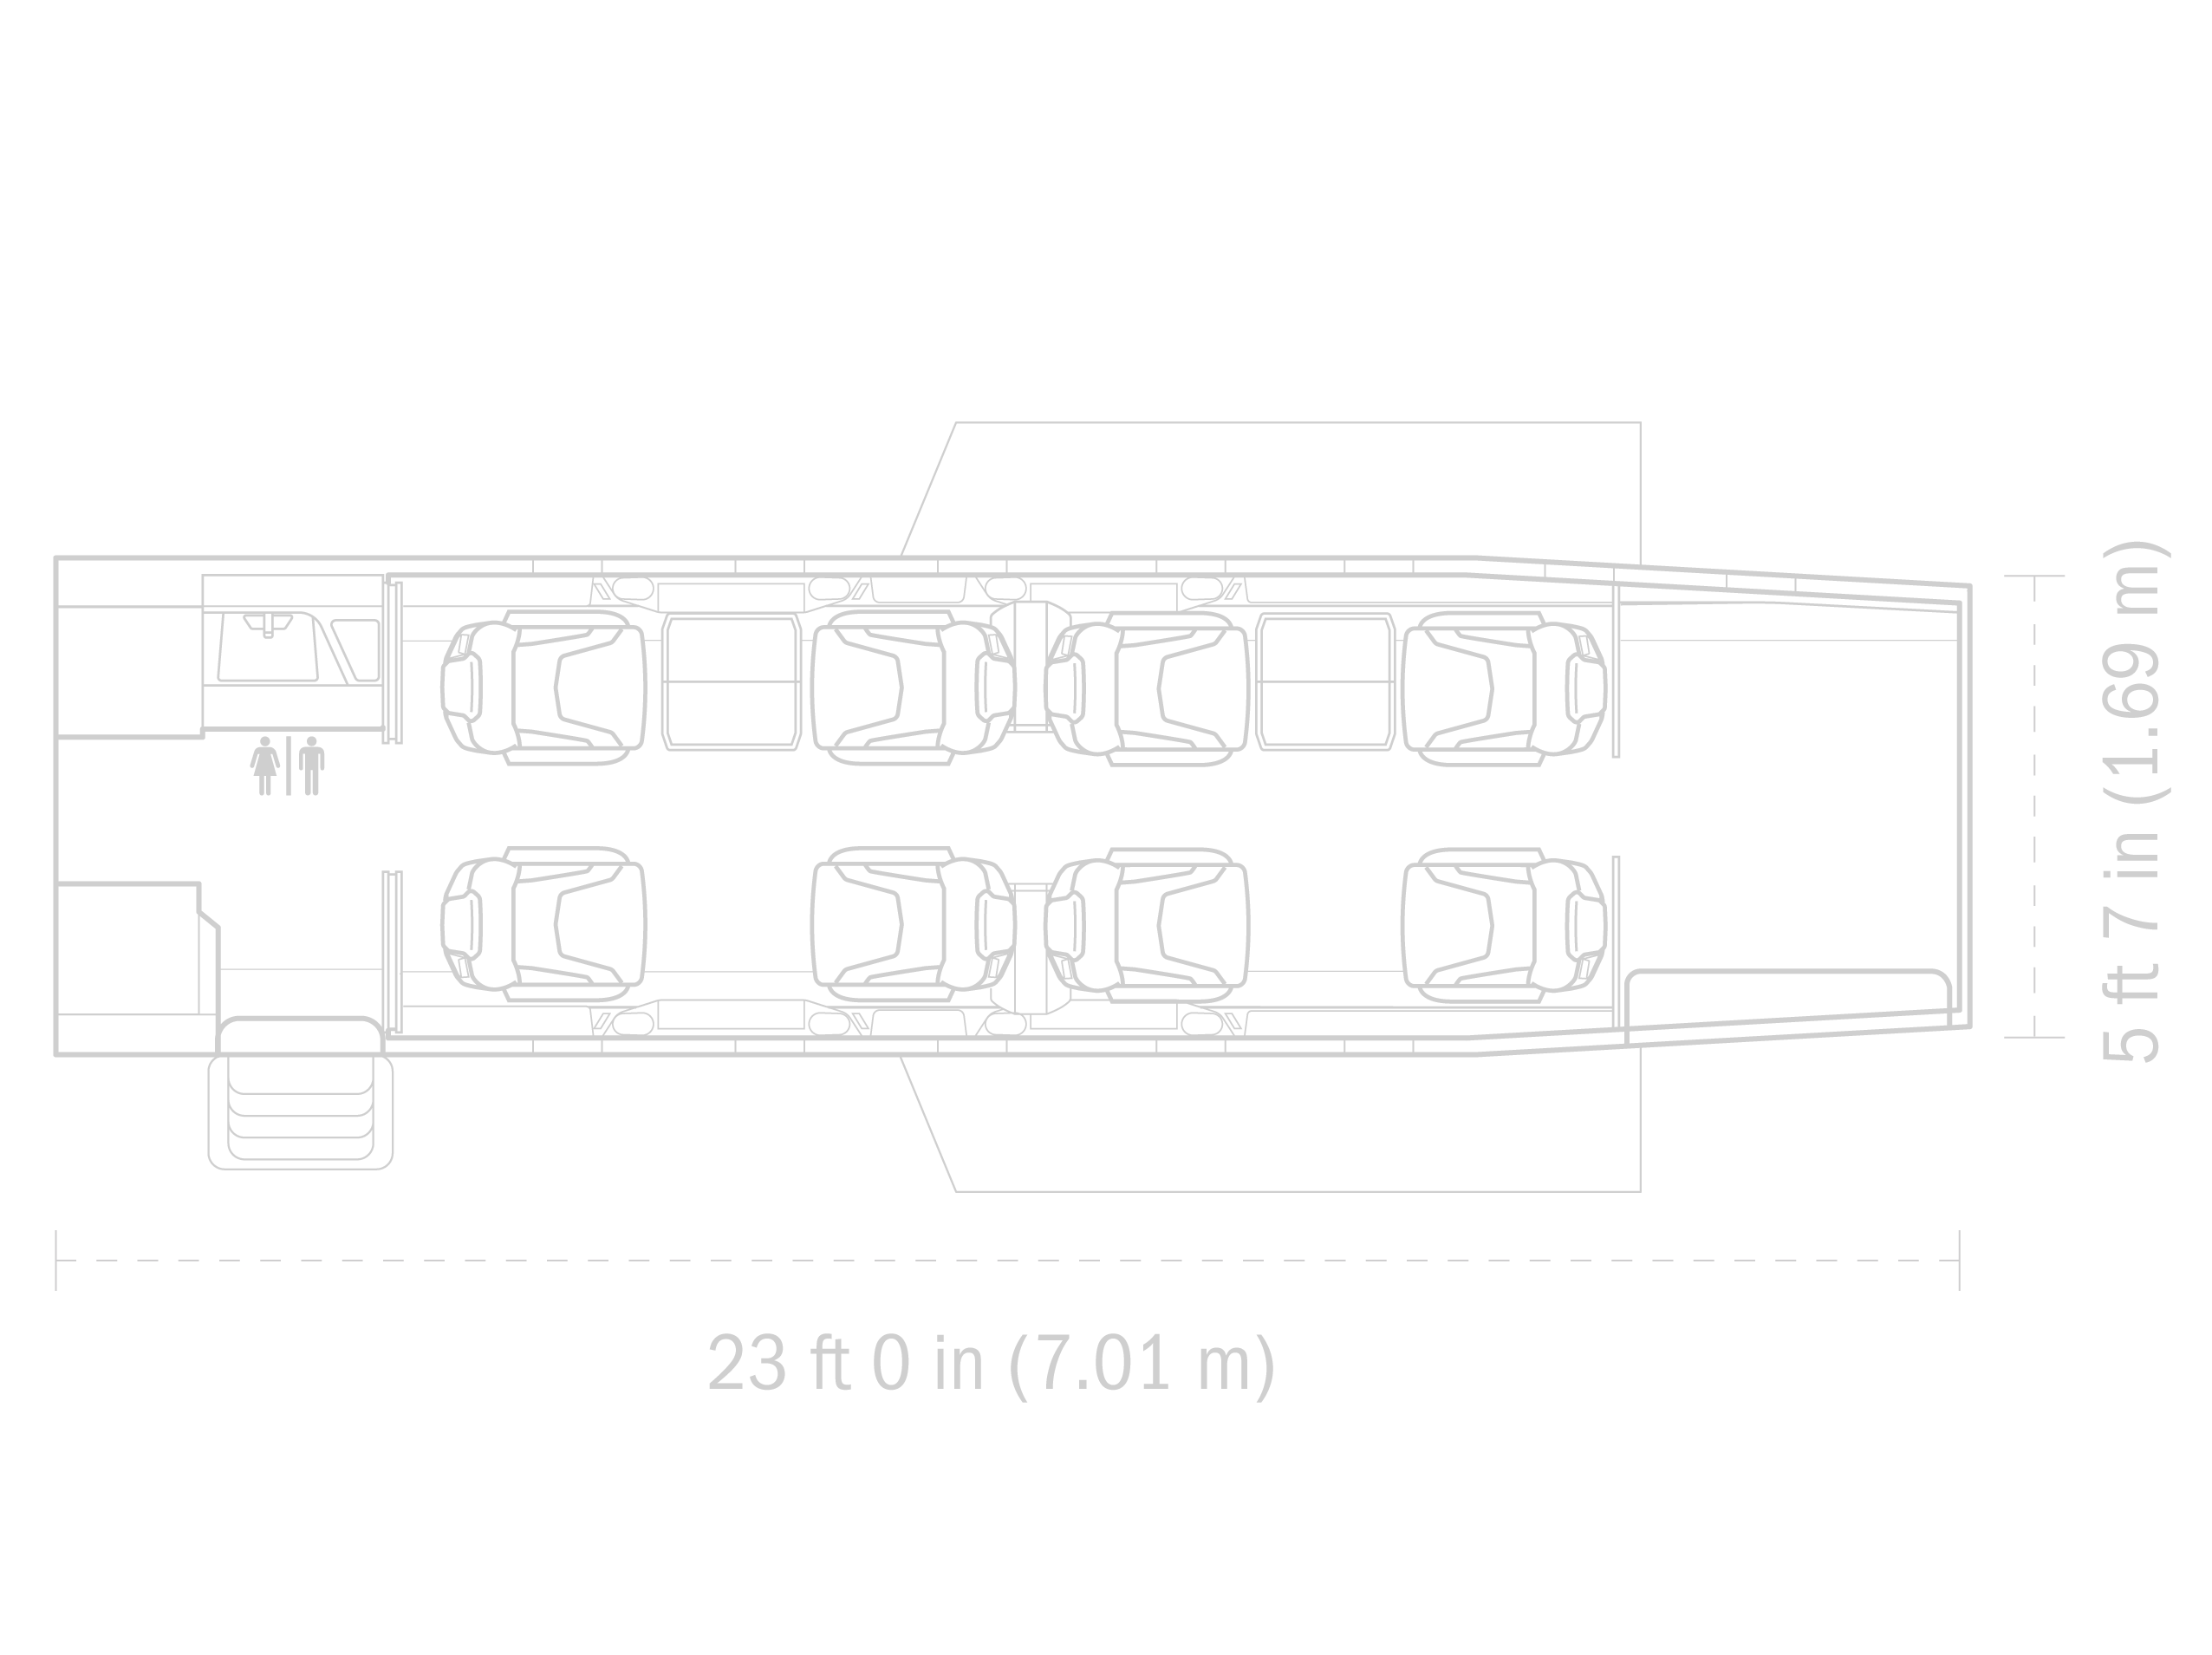 Pilatus PC-24 layout